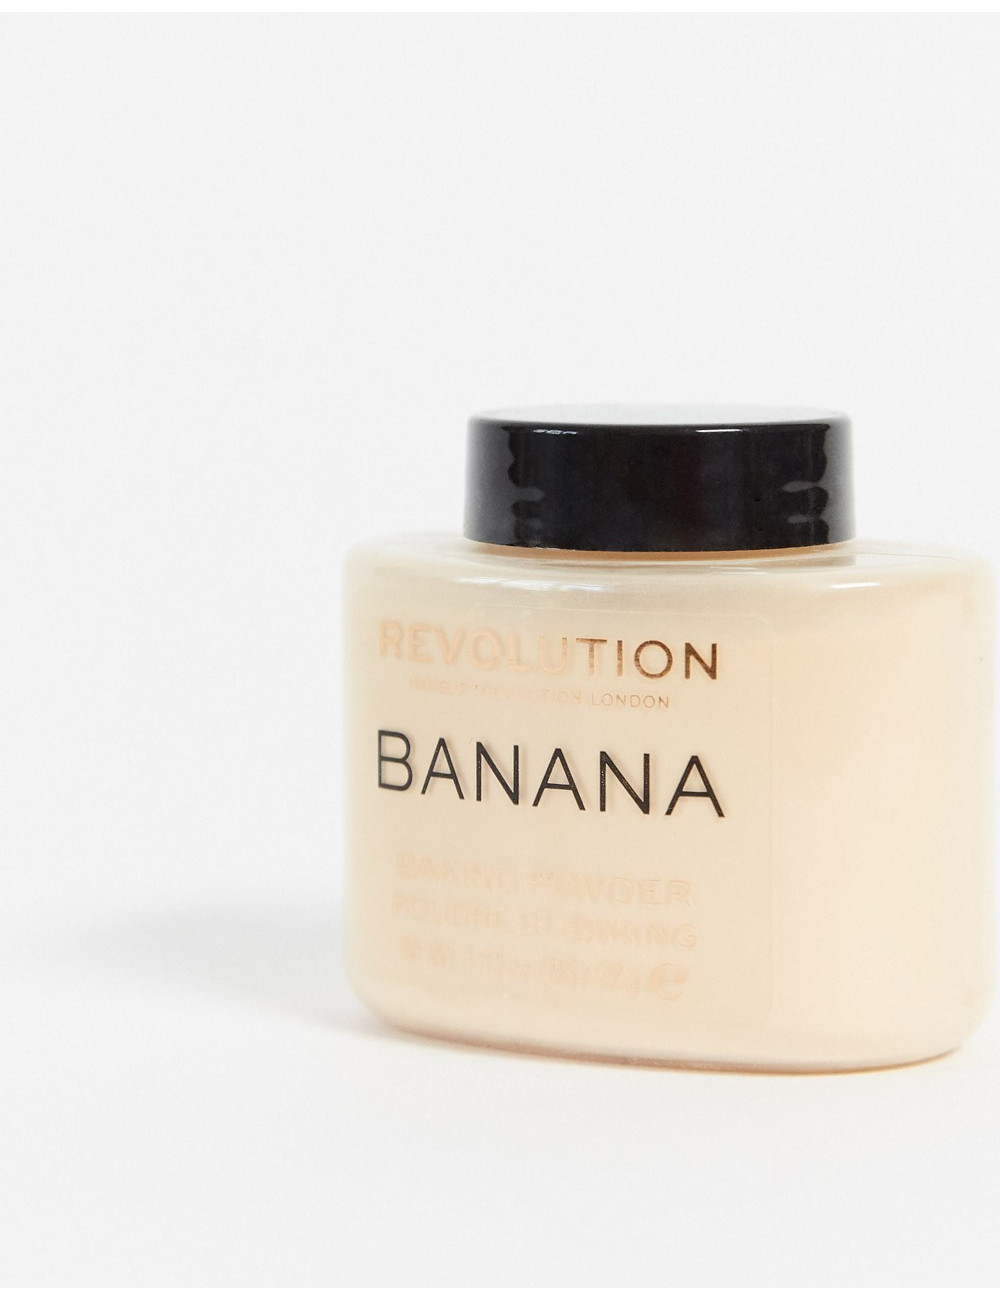 Revolution Luxury Banana...